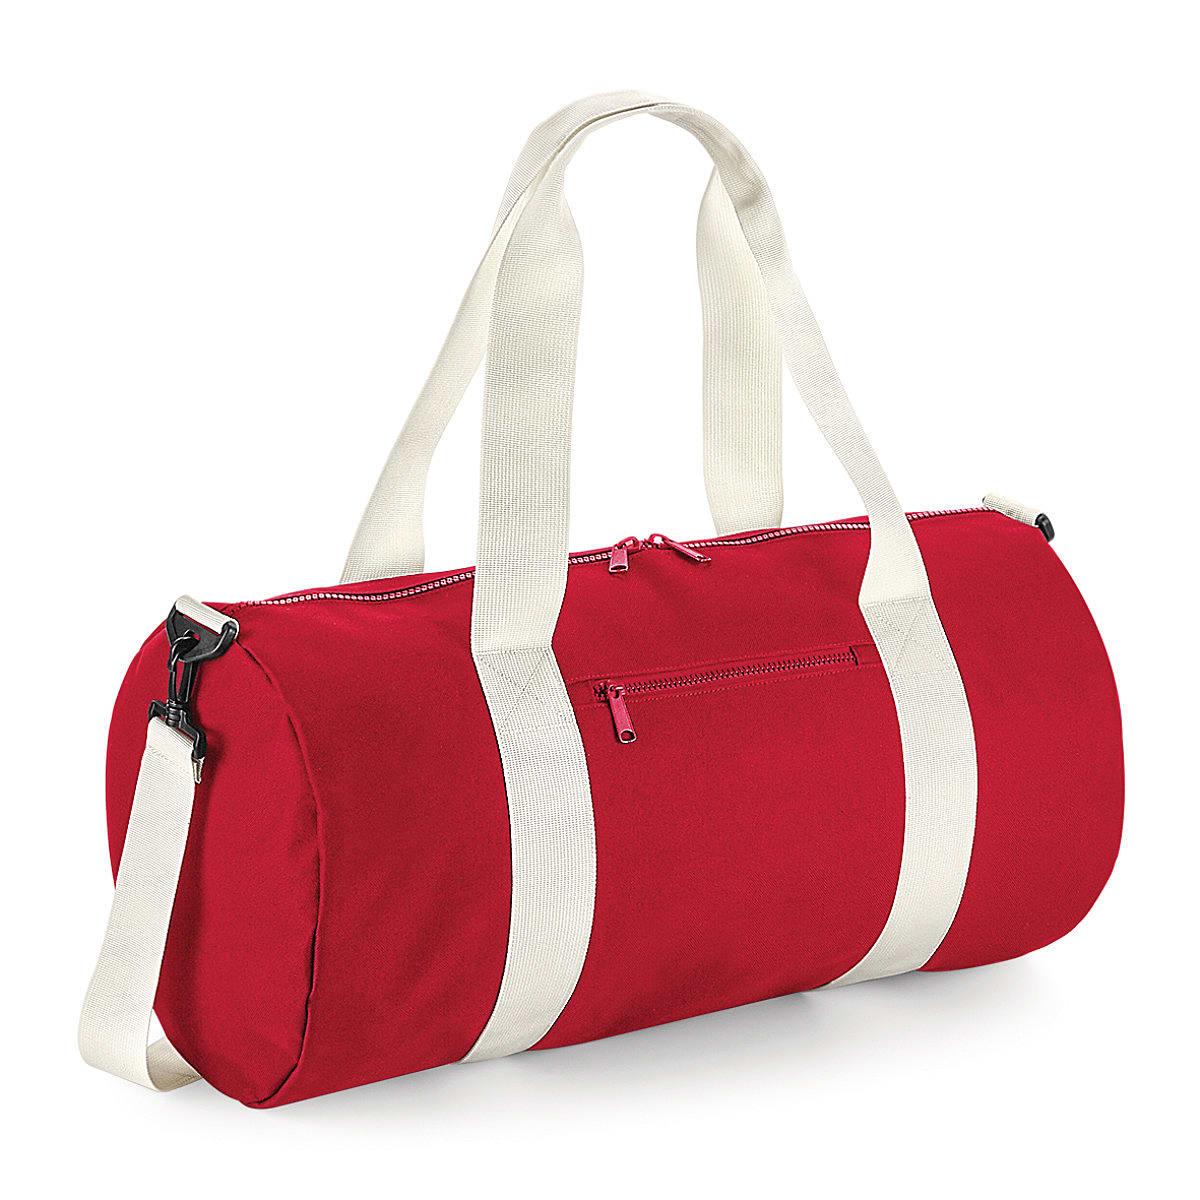 Bagbase Original Barrel Bag XL in Classic Red / Off-White (Product Code: BG140L)